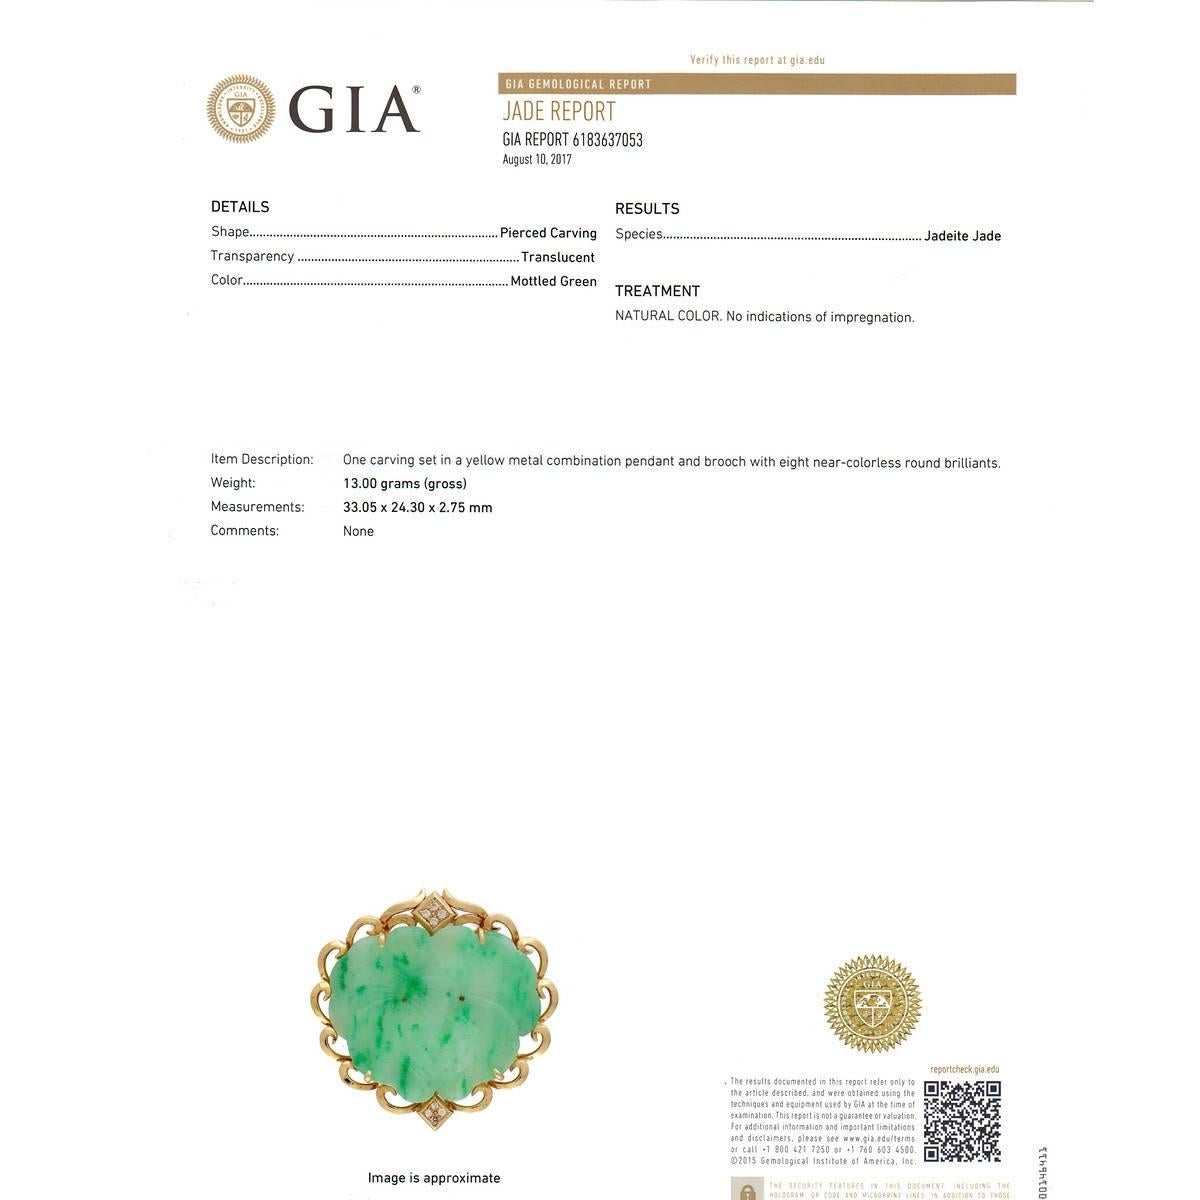 GIA Certified Jadeite Jade Carved Mottled Green Diamond Gold Pendant Brooch 4